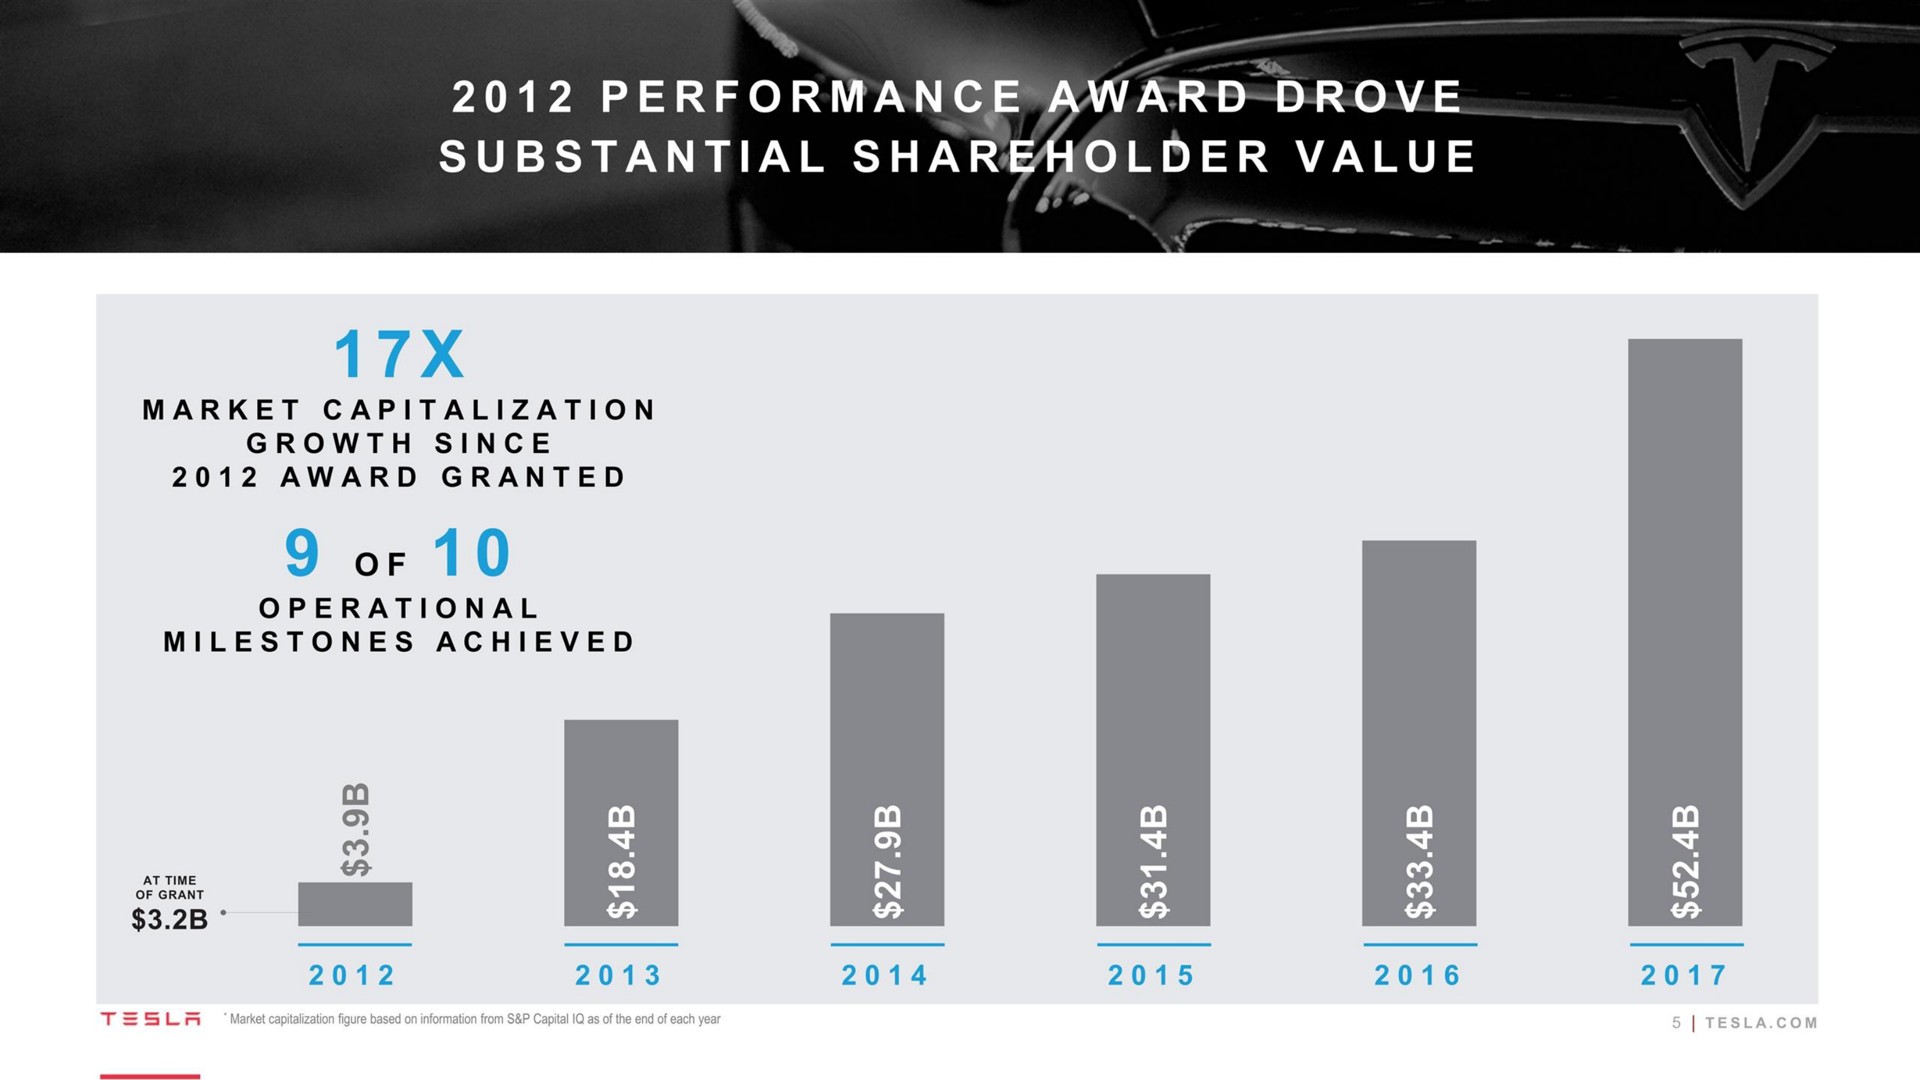 performance award drove substantial shareholder value of | Tesla